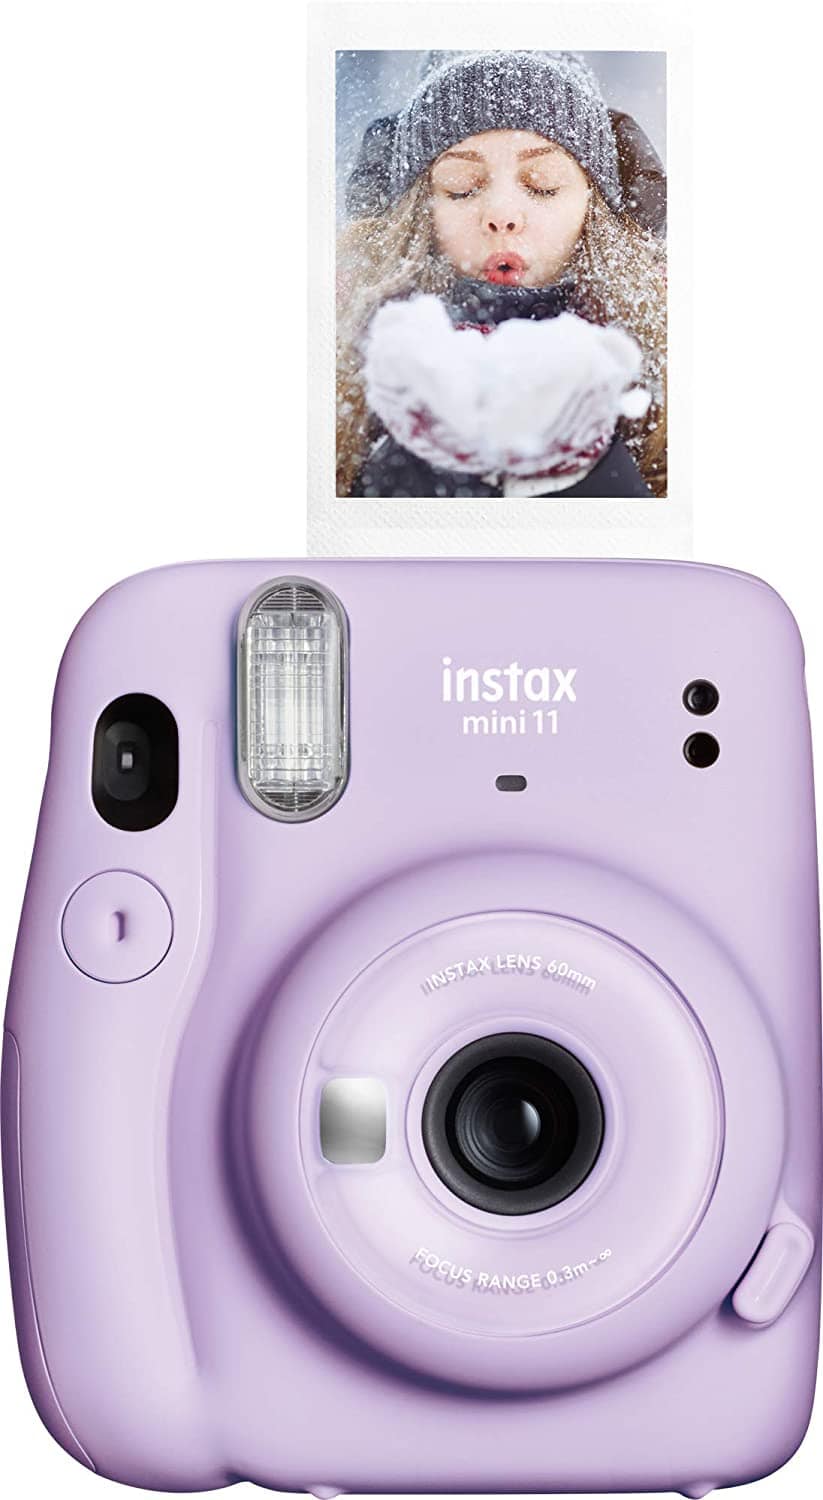 Instant camera in purple 